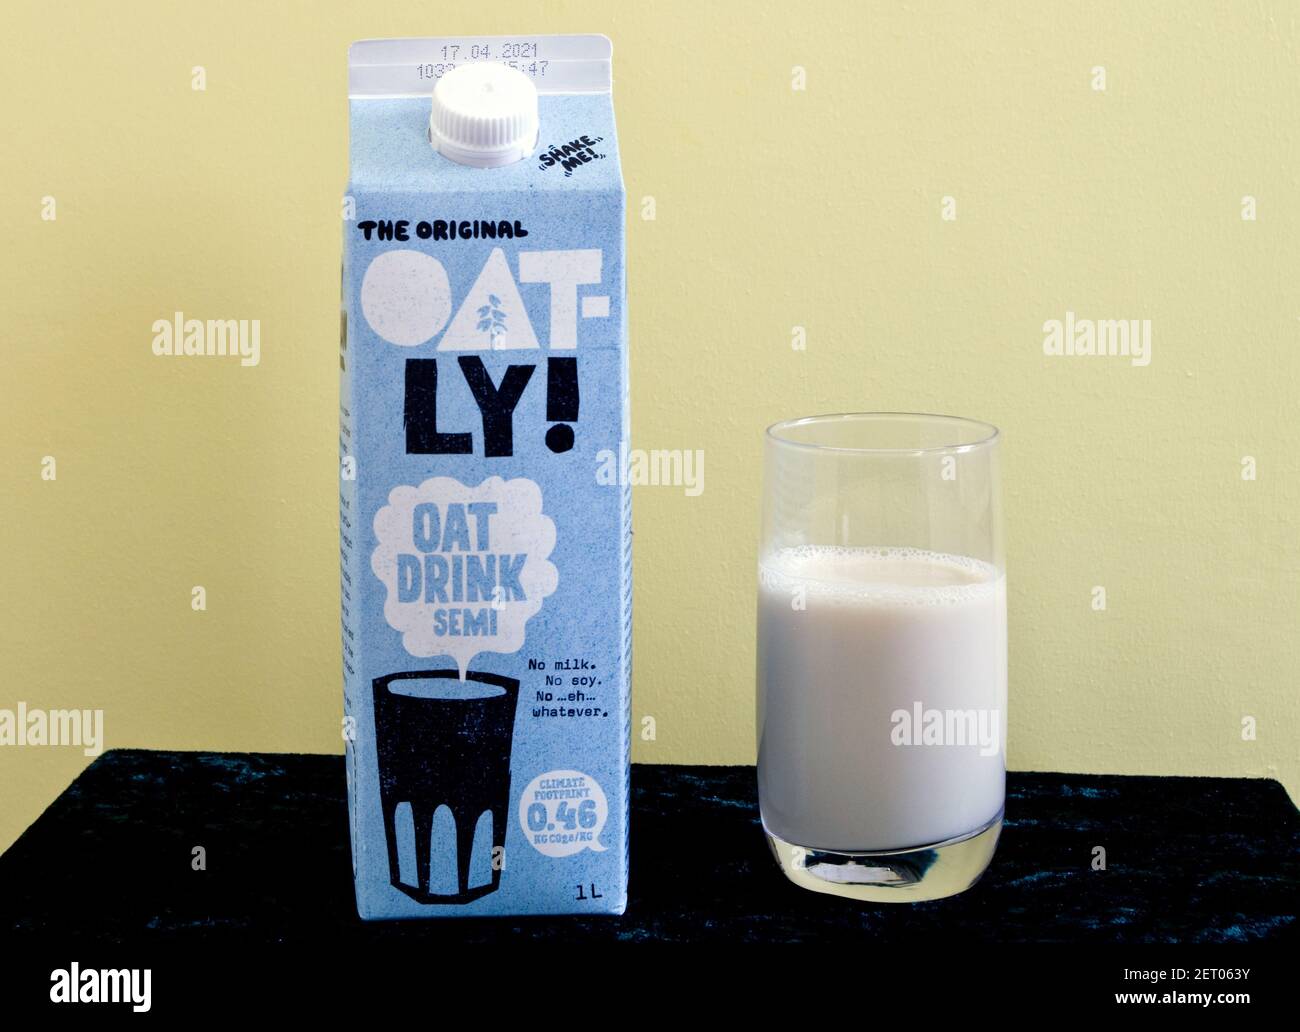 The Original Oatly Semi Oat Drink, A Vegan Alternative to Dairy Based Milk, UK Stock Photo